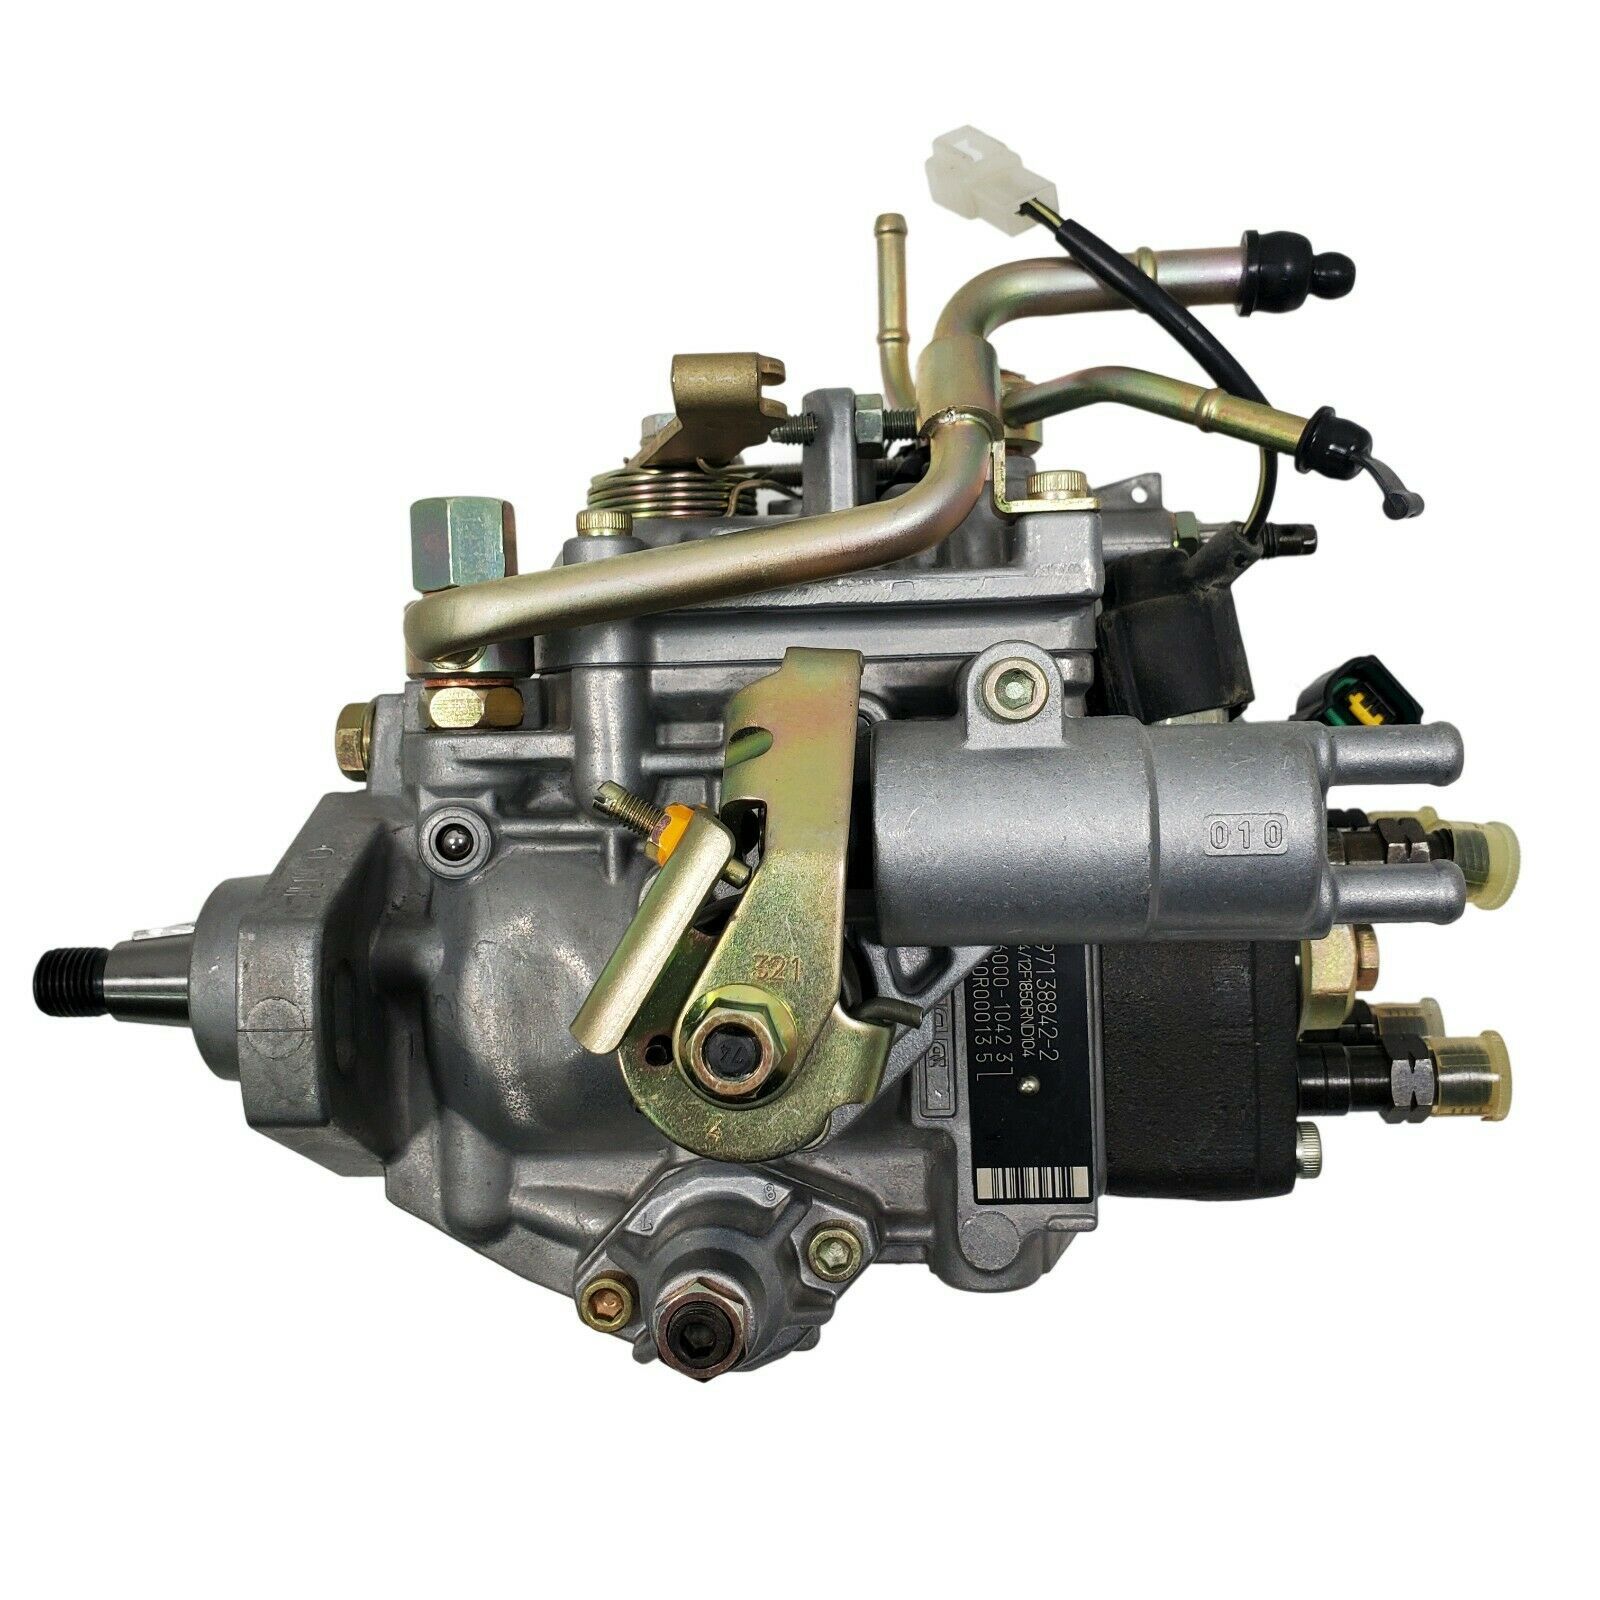 Denso VE4 Fuel Pump Fits Isuzu Engine 196000-1042 (8971388422;VE4/12F1850RND104) - $700.00